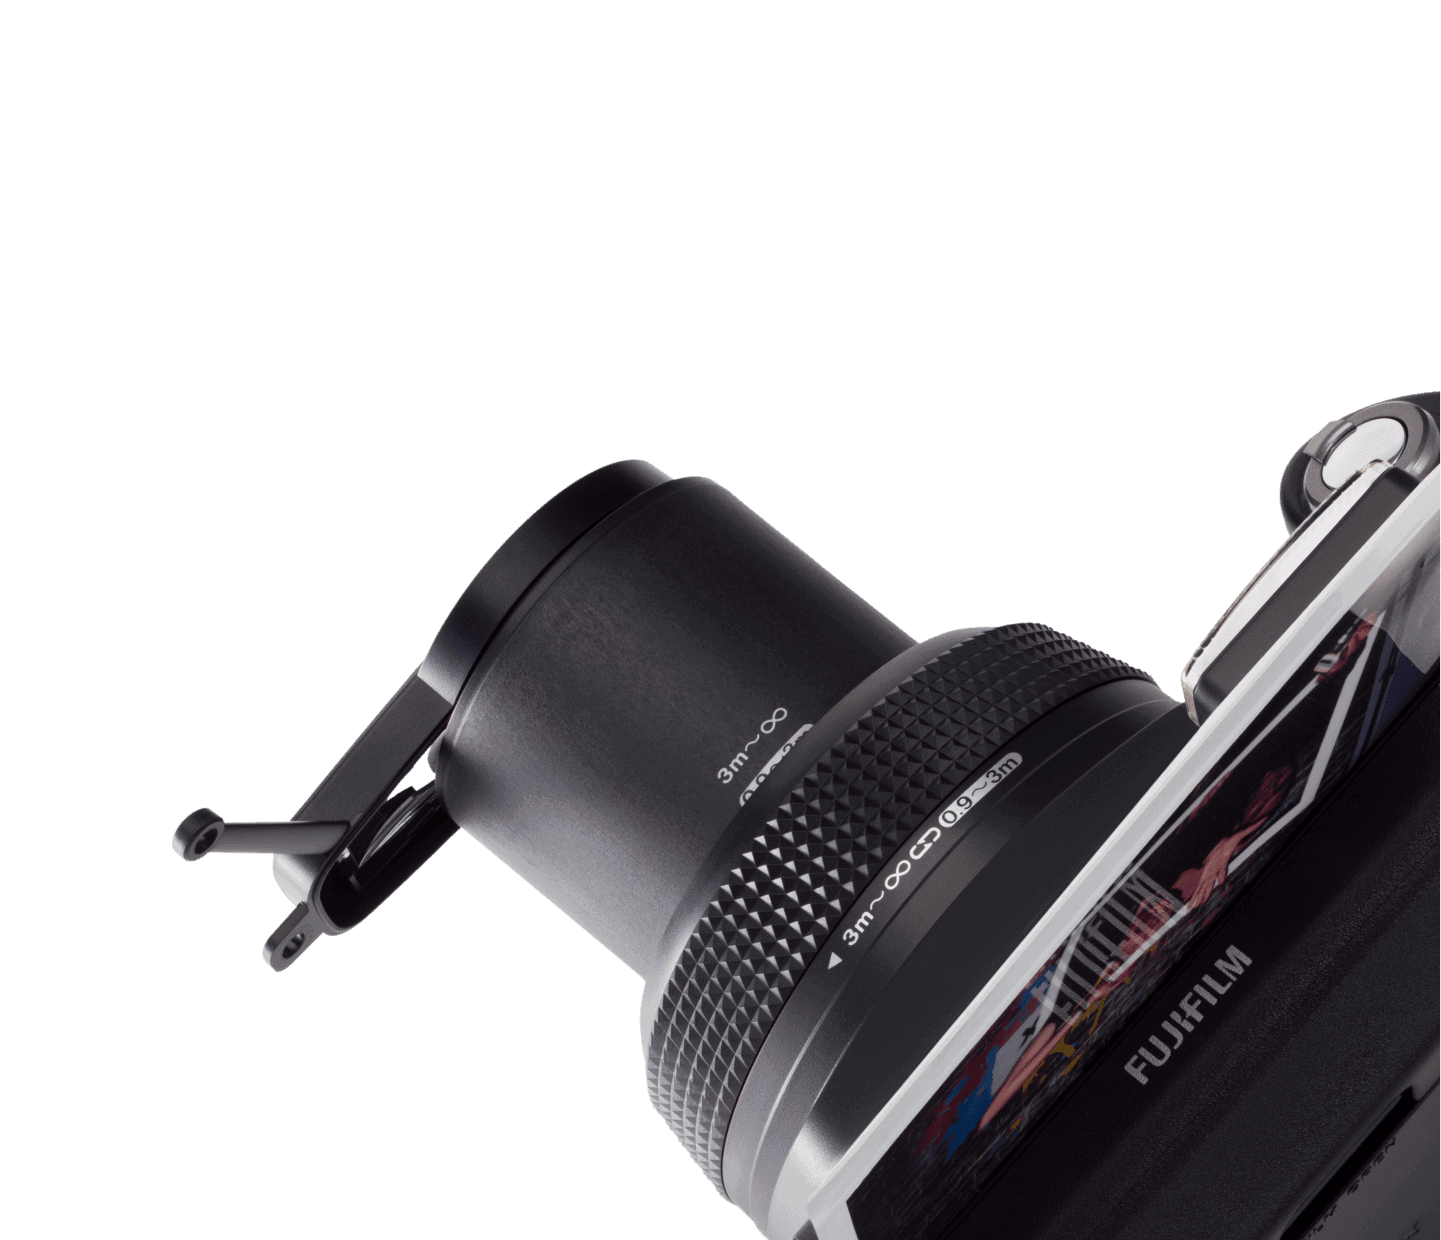 INSTAX Wide 300 Instant Film Camera, Retractable 95mm f/14 Lens